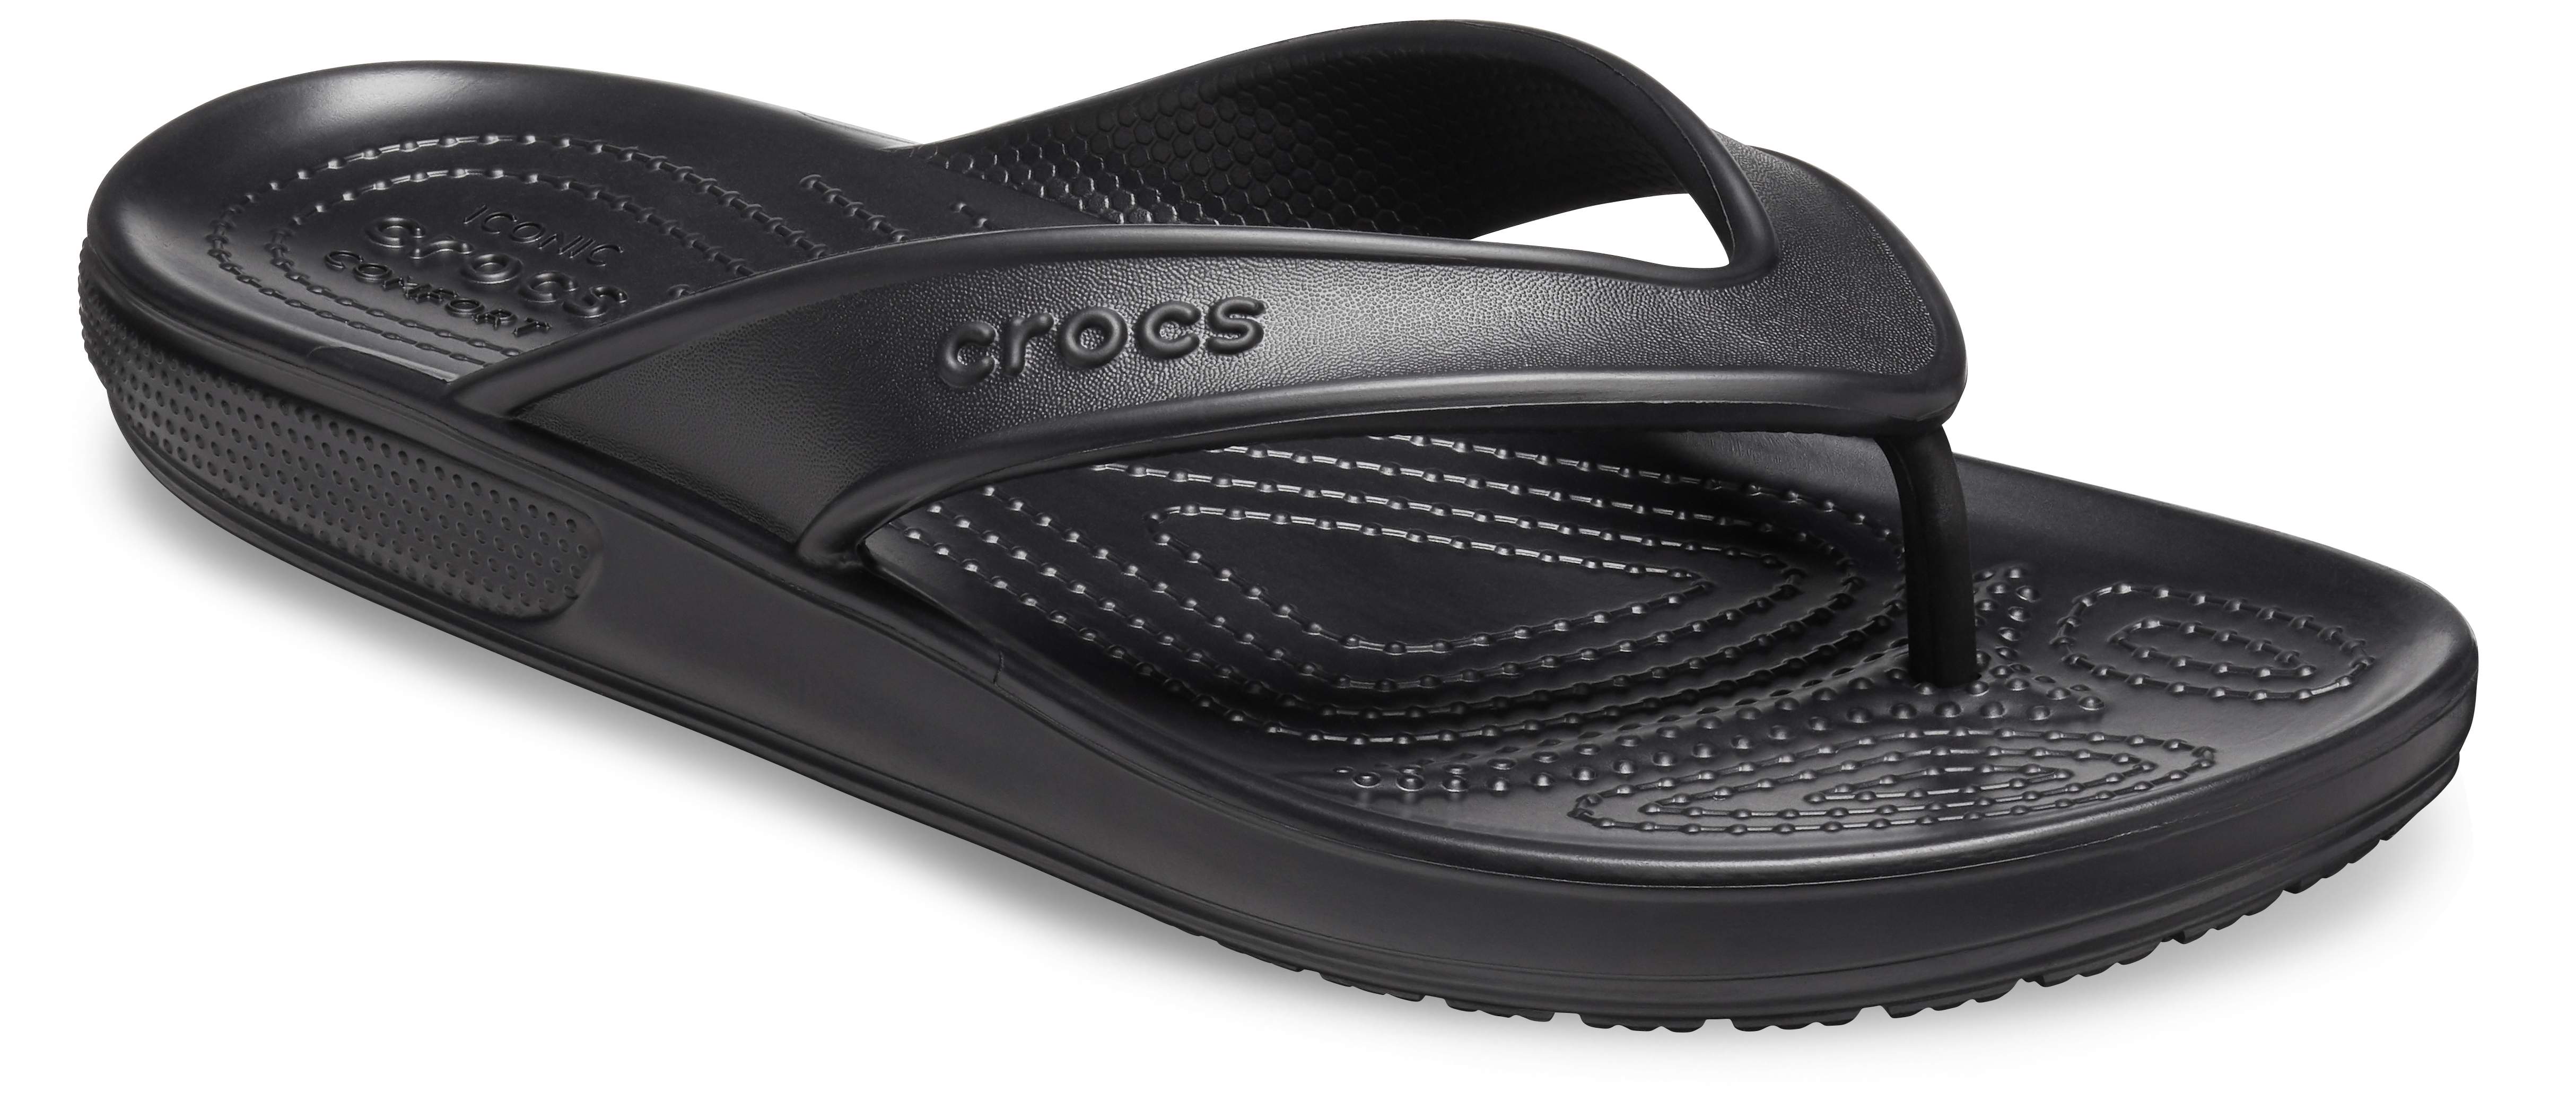 croc flip flops on sale